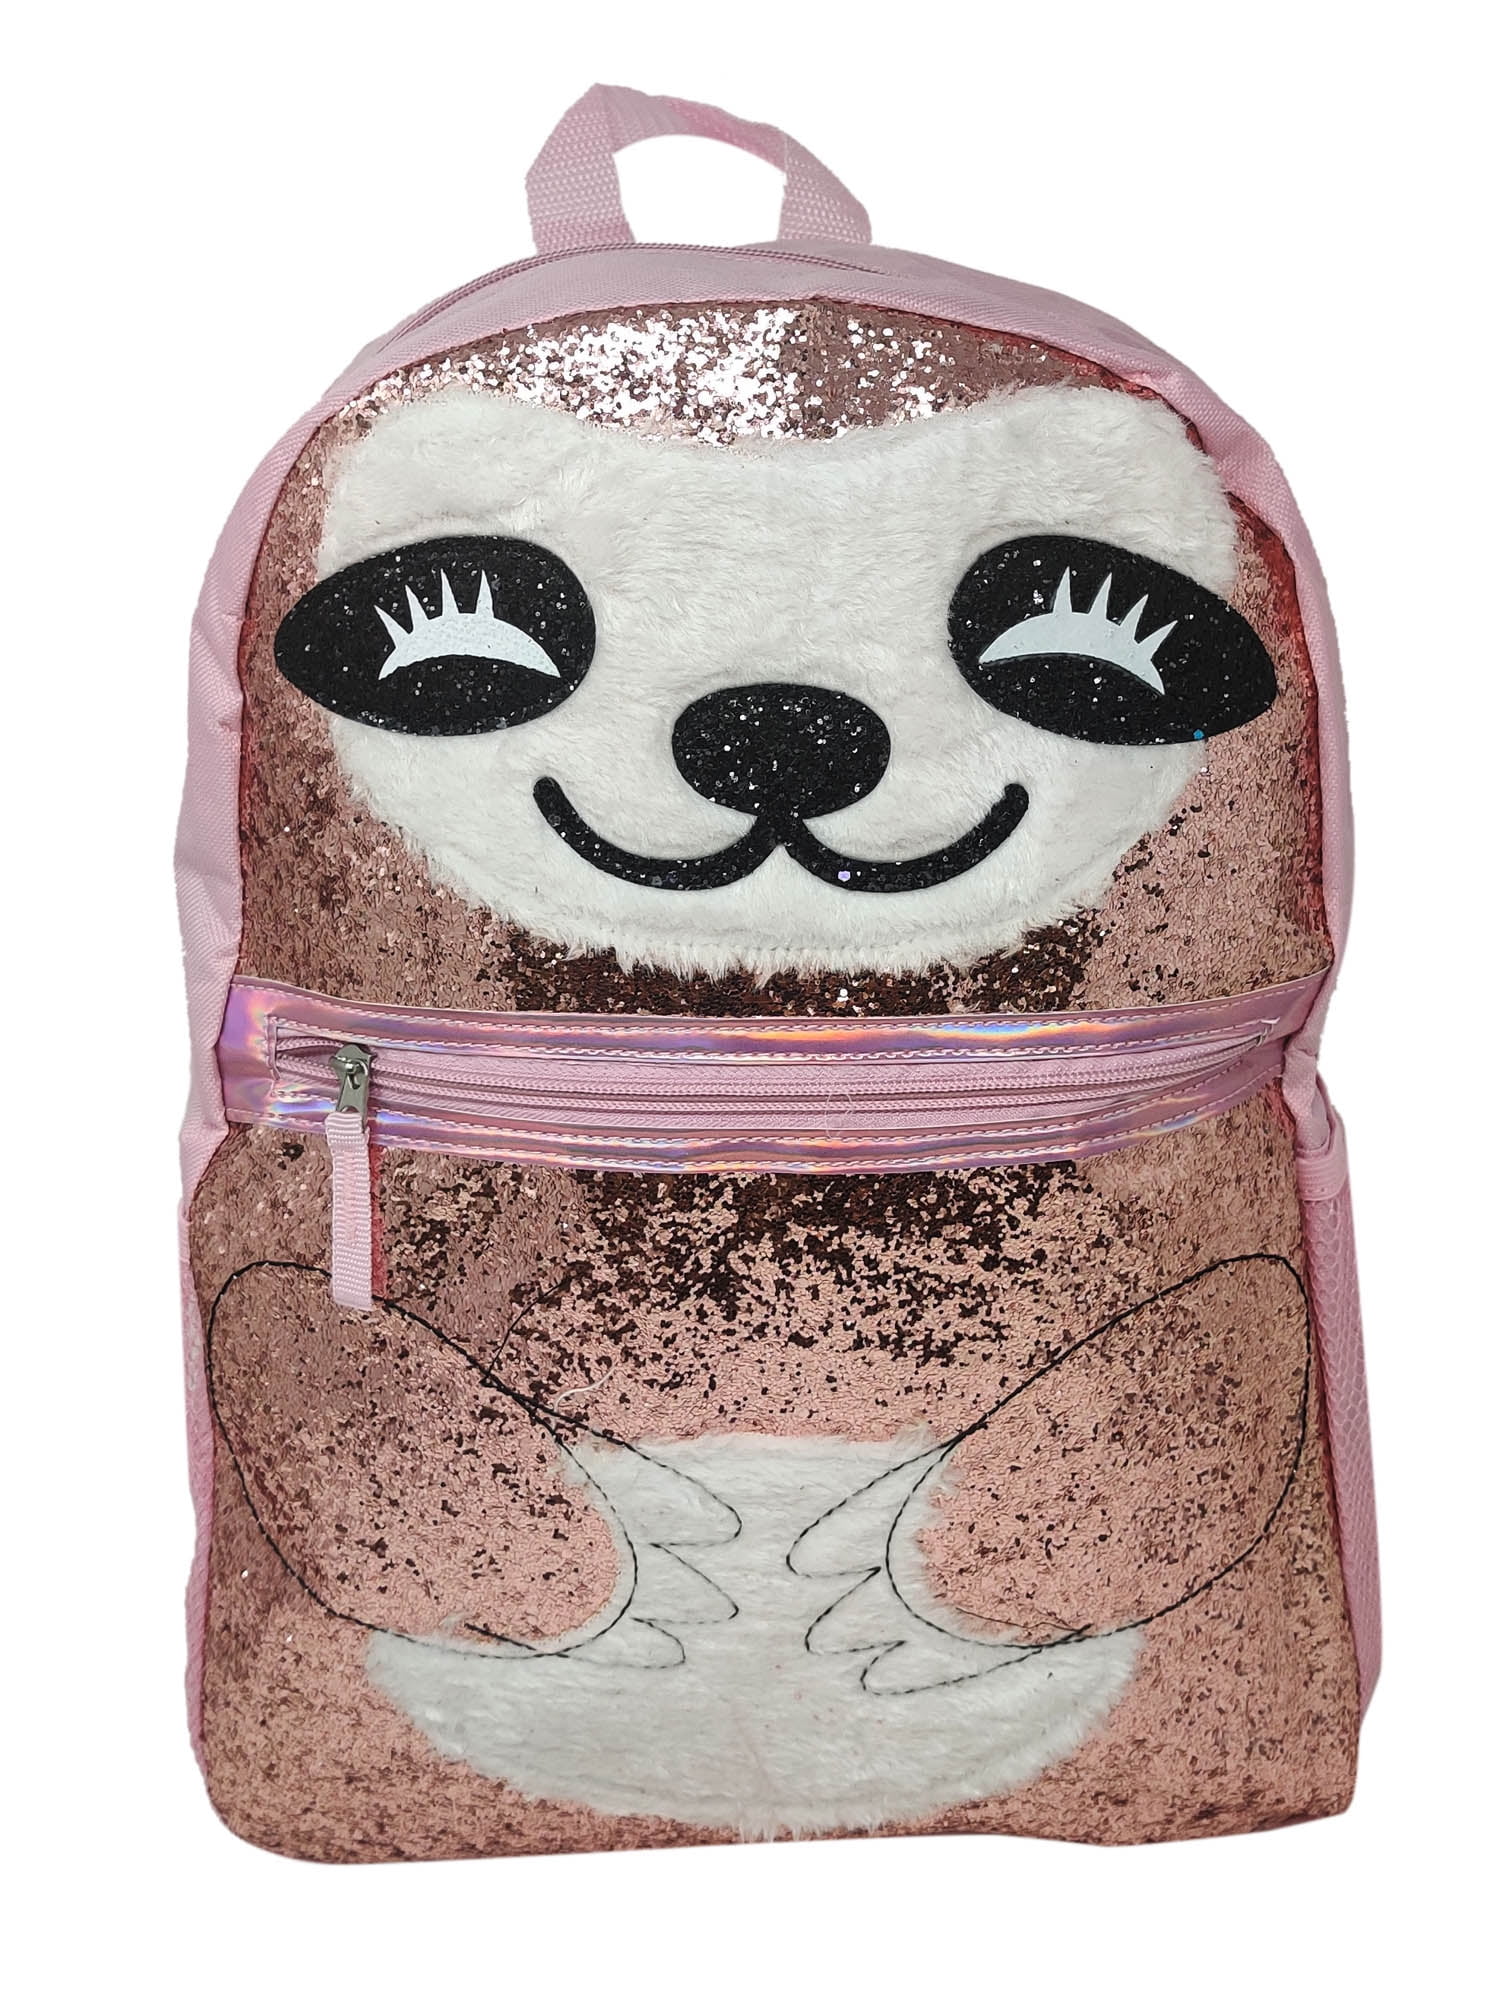 3D Leaves Sloth Painting Children School Bag with Lunch Bag Pencil Holder 3PCS/Set,Blue Boys Girls Backpack